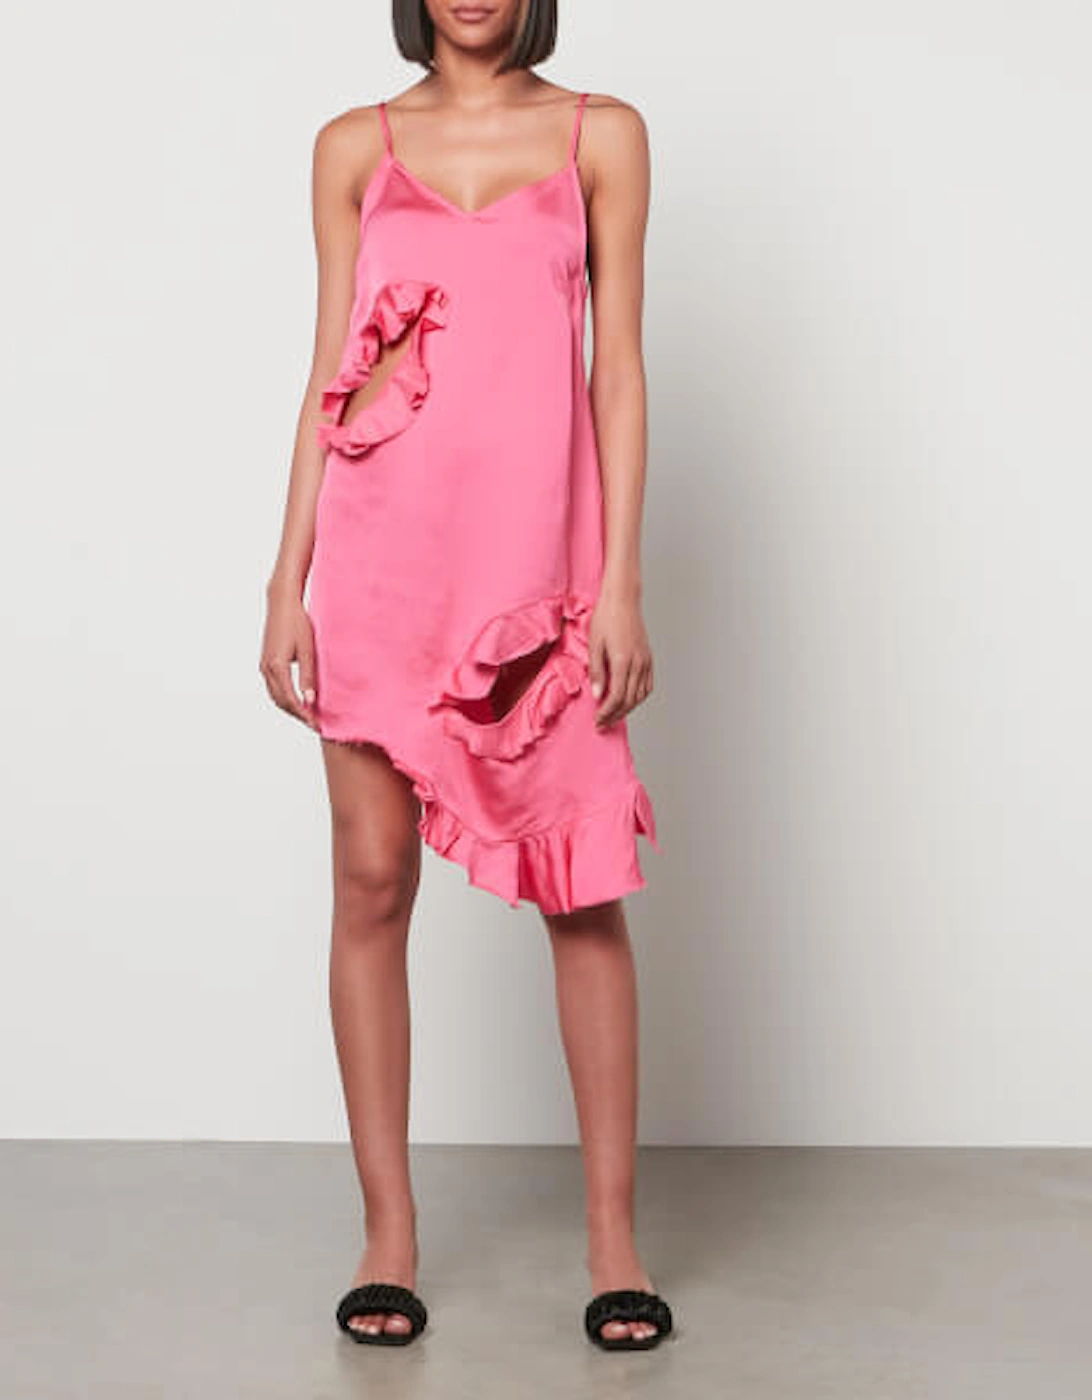 Marques Almeida Women's Slip Dress With Flounces - Pink - Marques Almeida - Home - Marques Almeida Women's Slip Dress With Flounces - Pink, 3 of 2